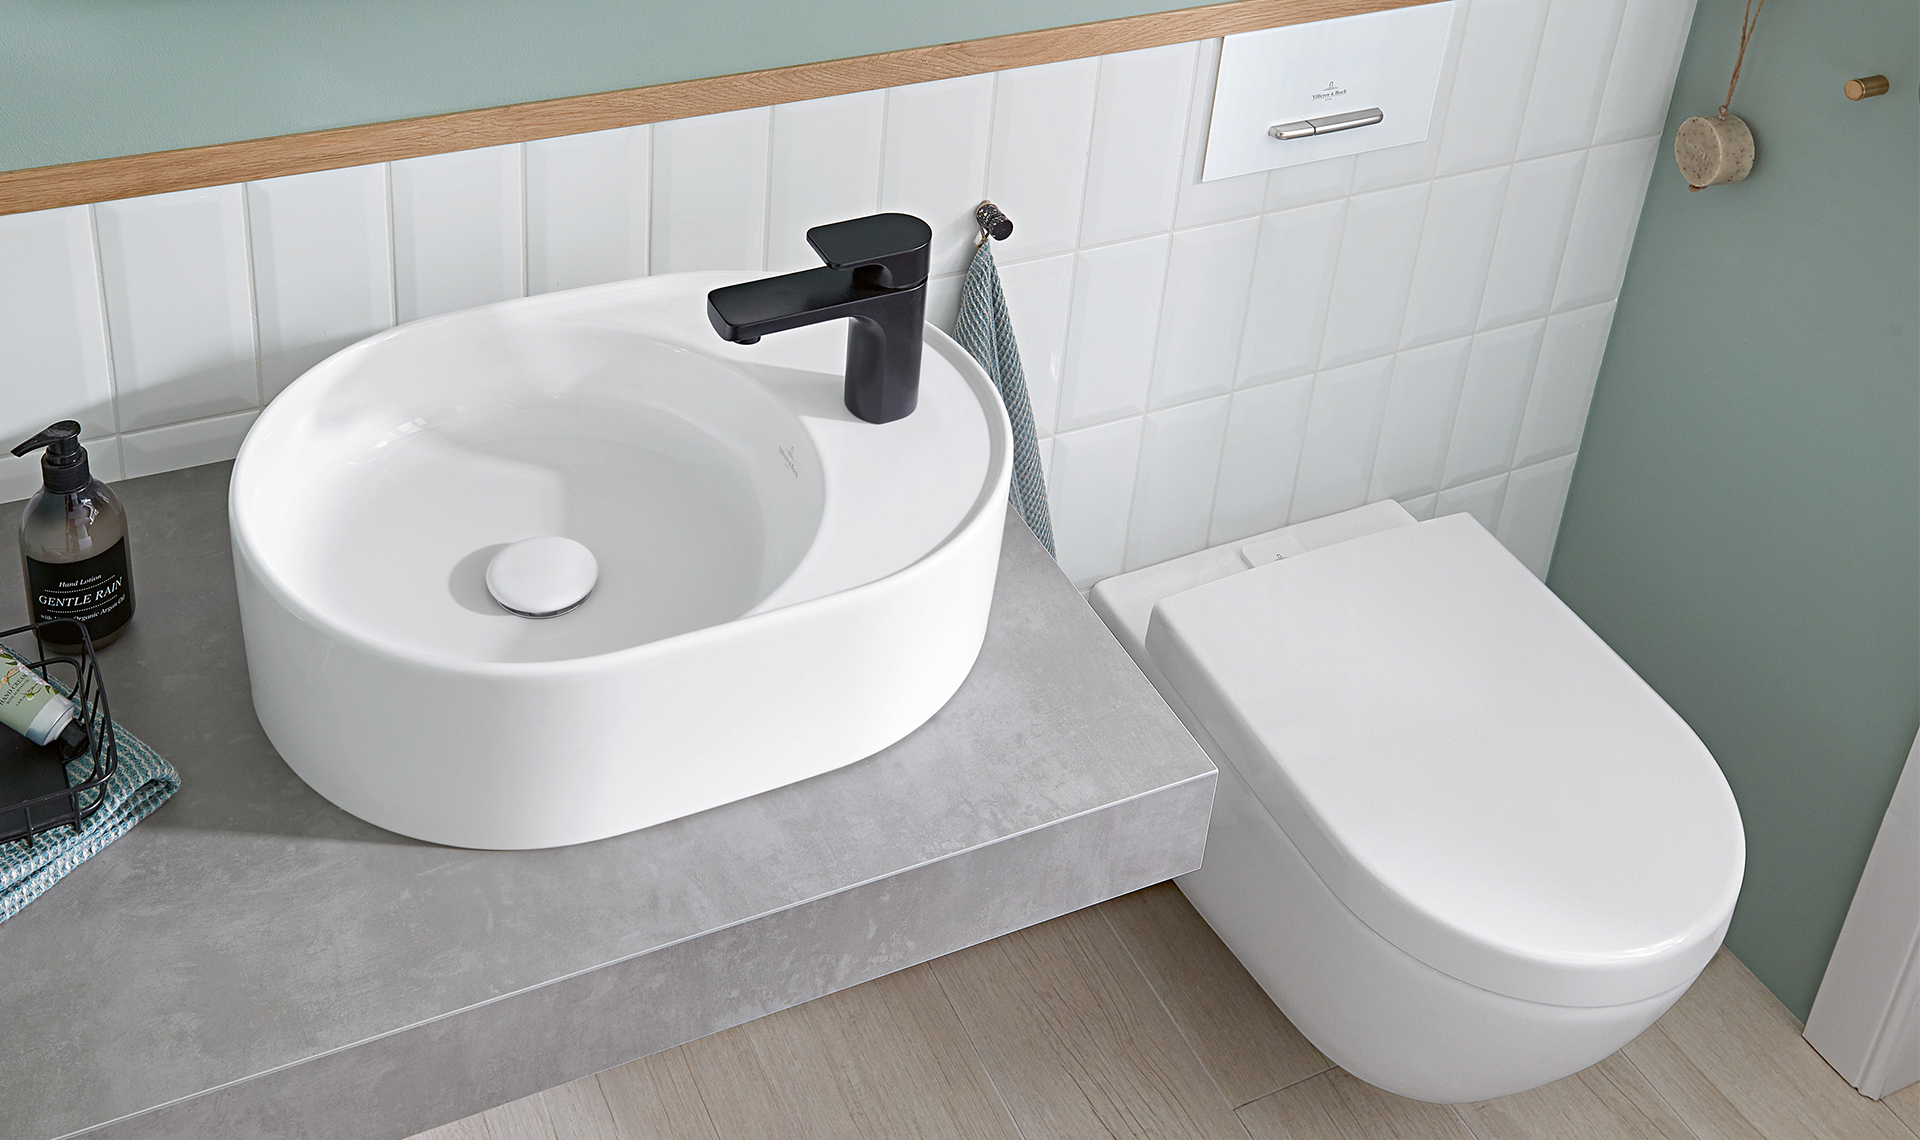 Villeroy & Boch: три тренда в дизайне ванной комнаты